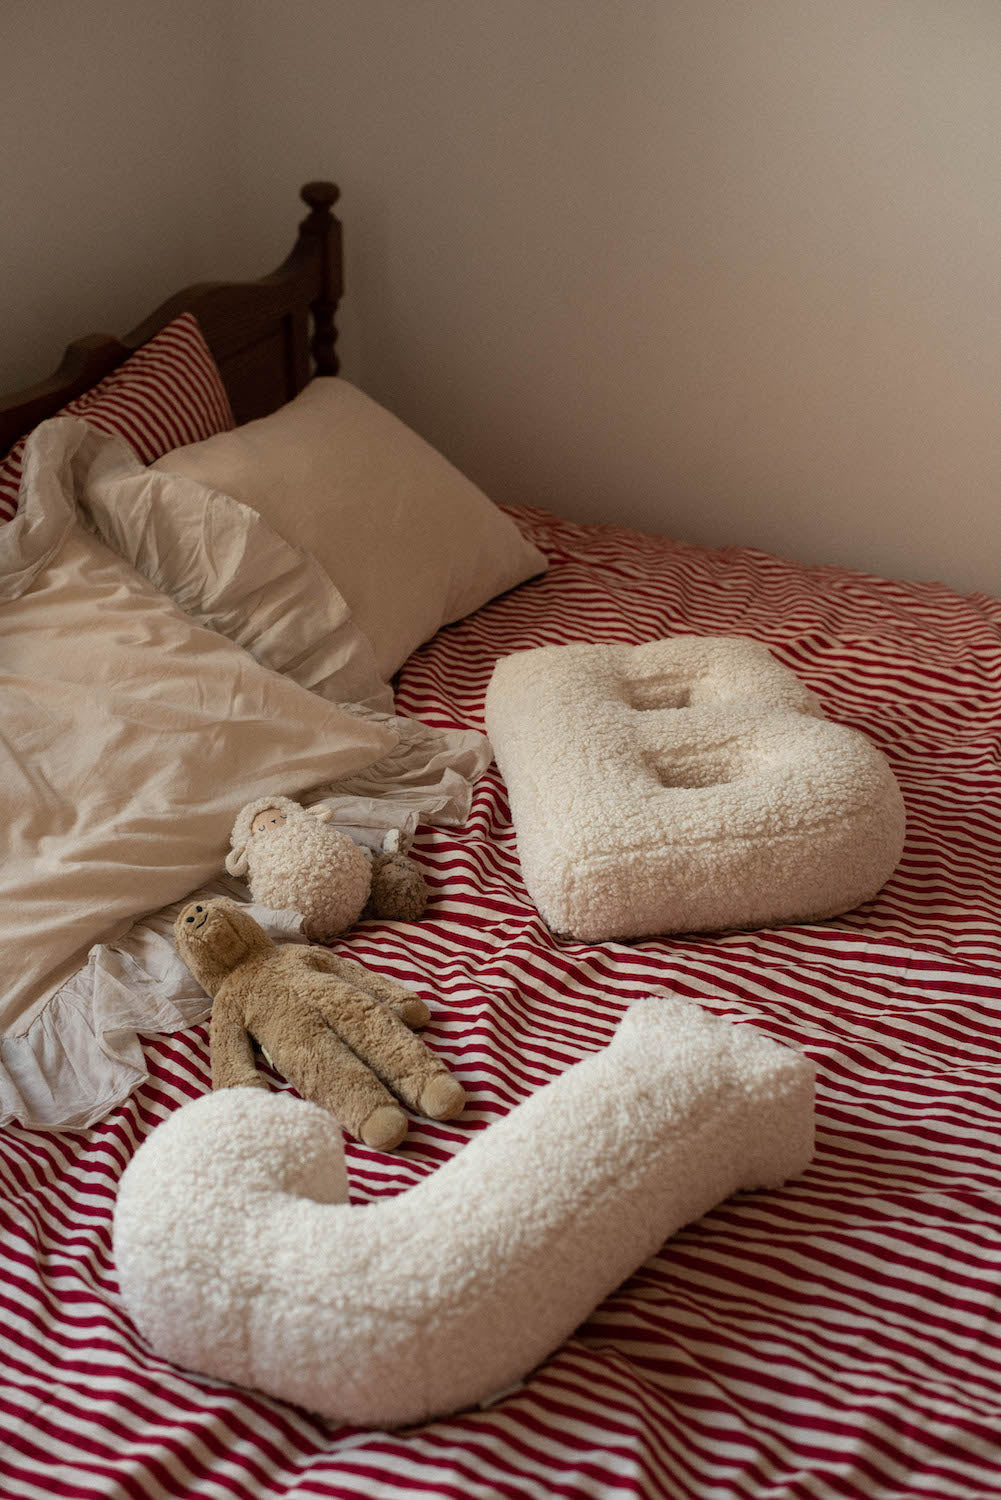 poduszka literka baranek B oraz J od Bettys Home leżąca na łóżku w sypialni